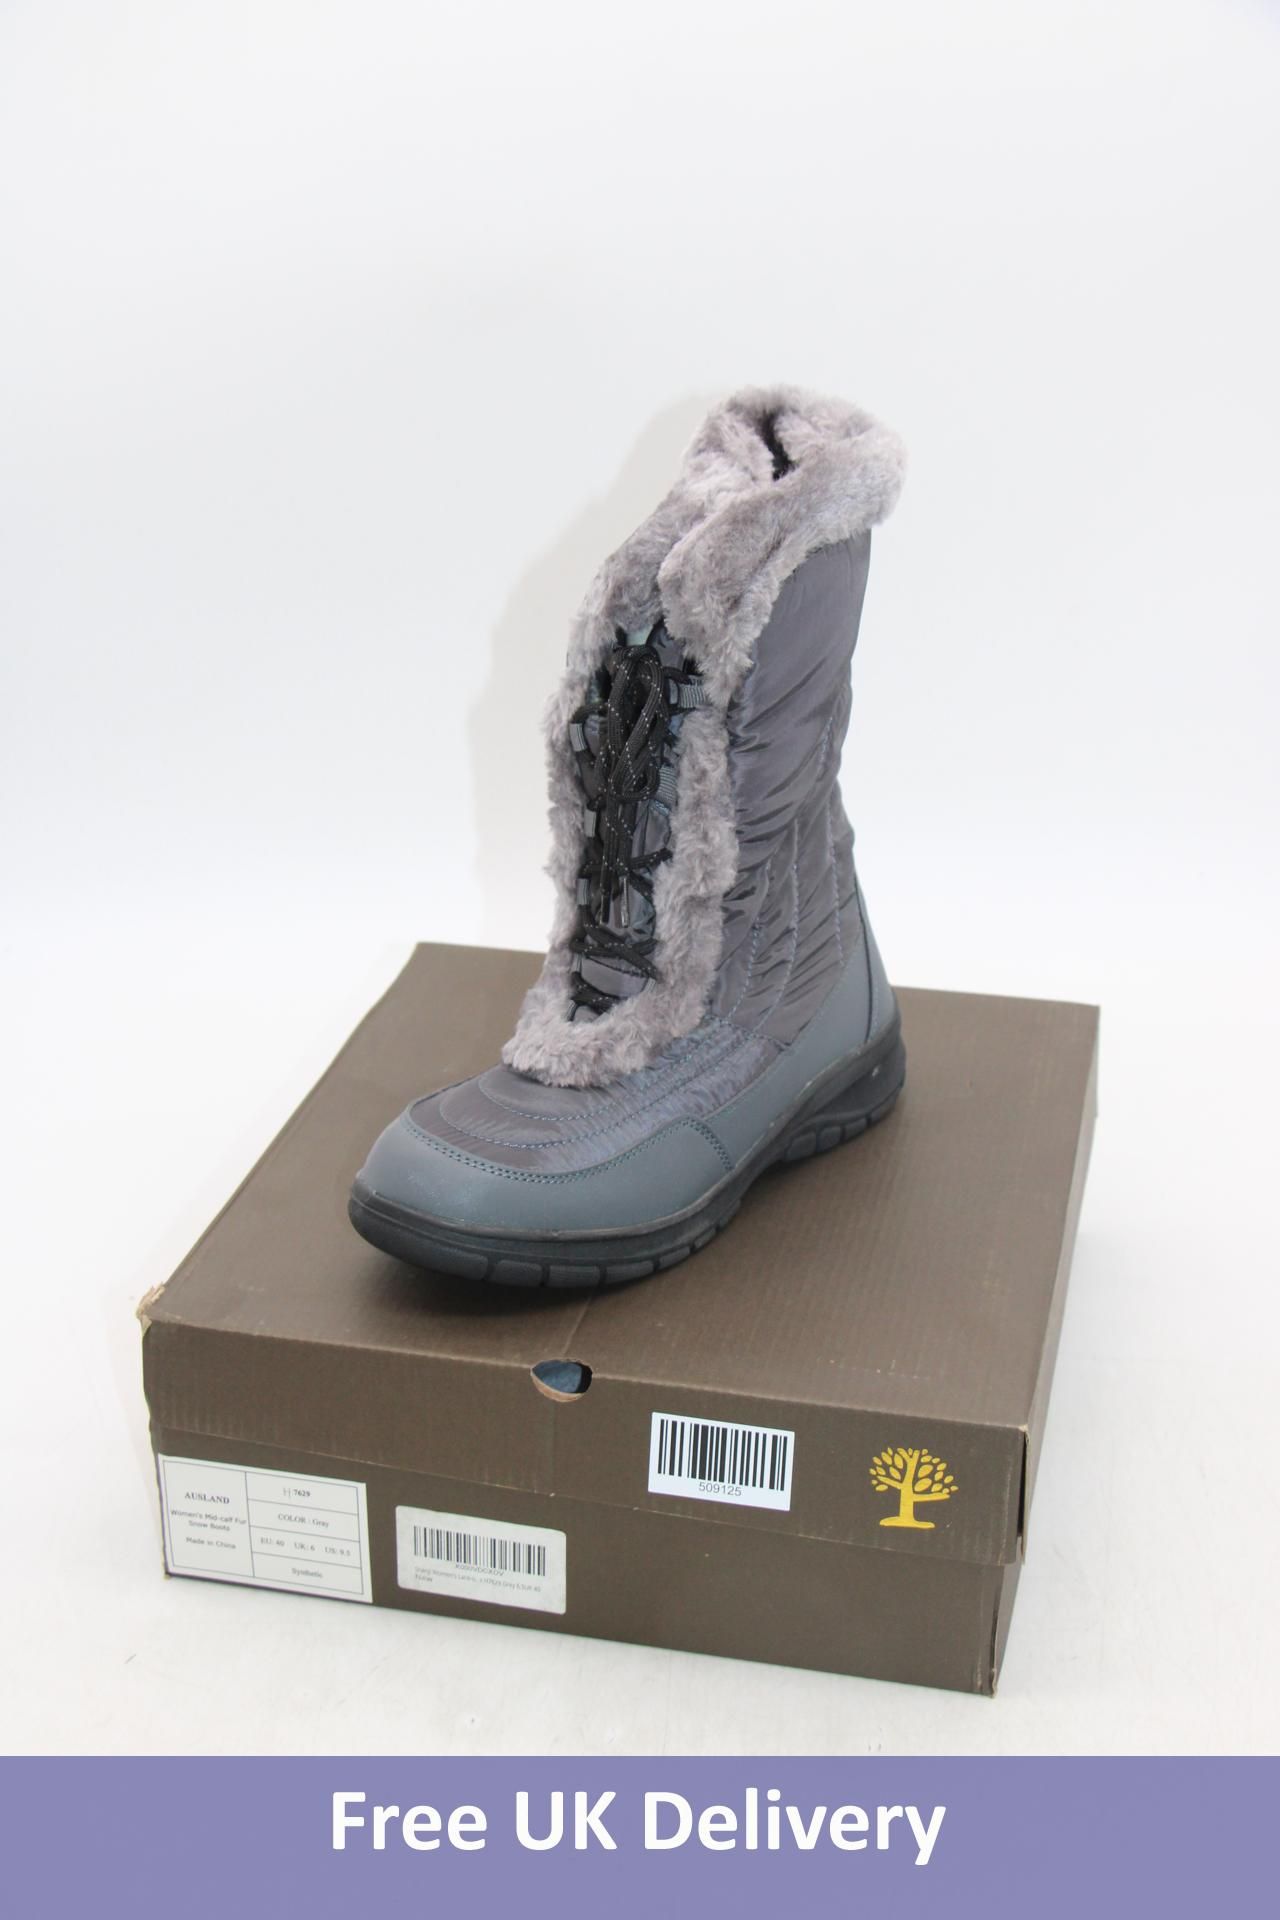 Ausland Woman's Lace Up Midcalf Fur Snow Boots, Grey, UK 6. Box damaged